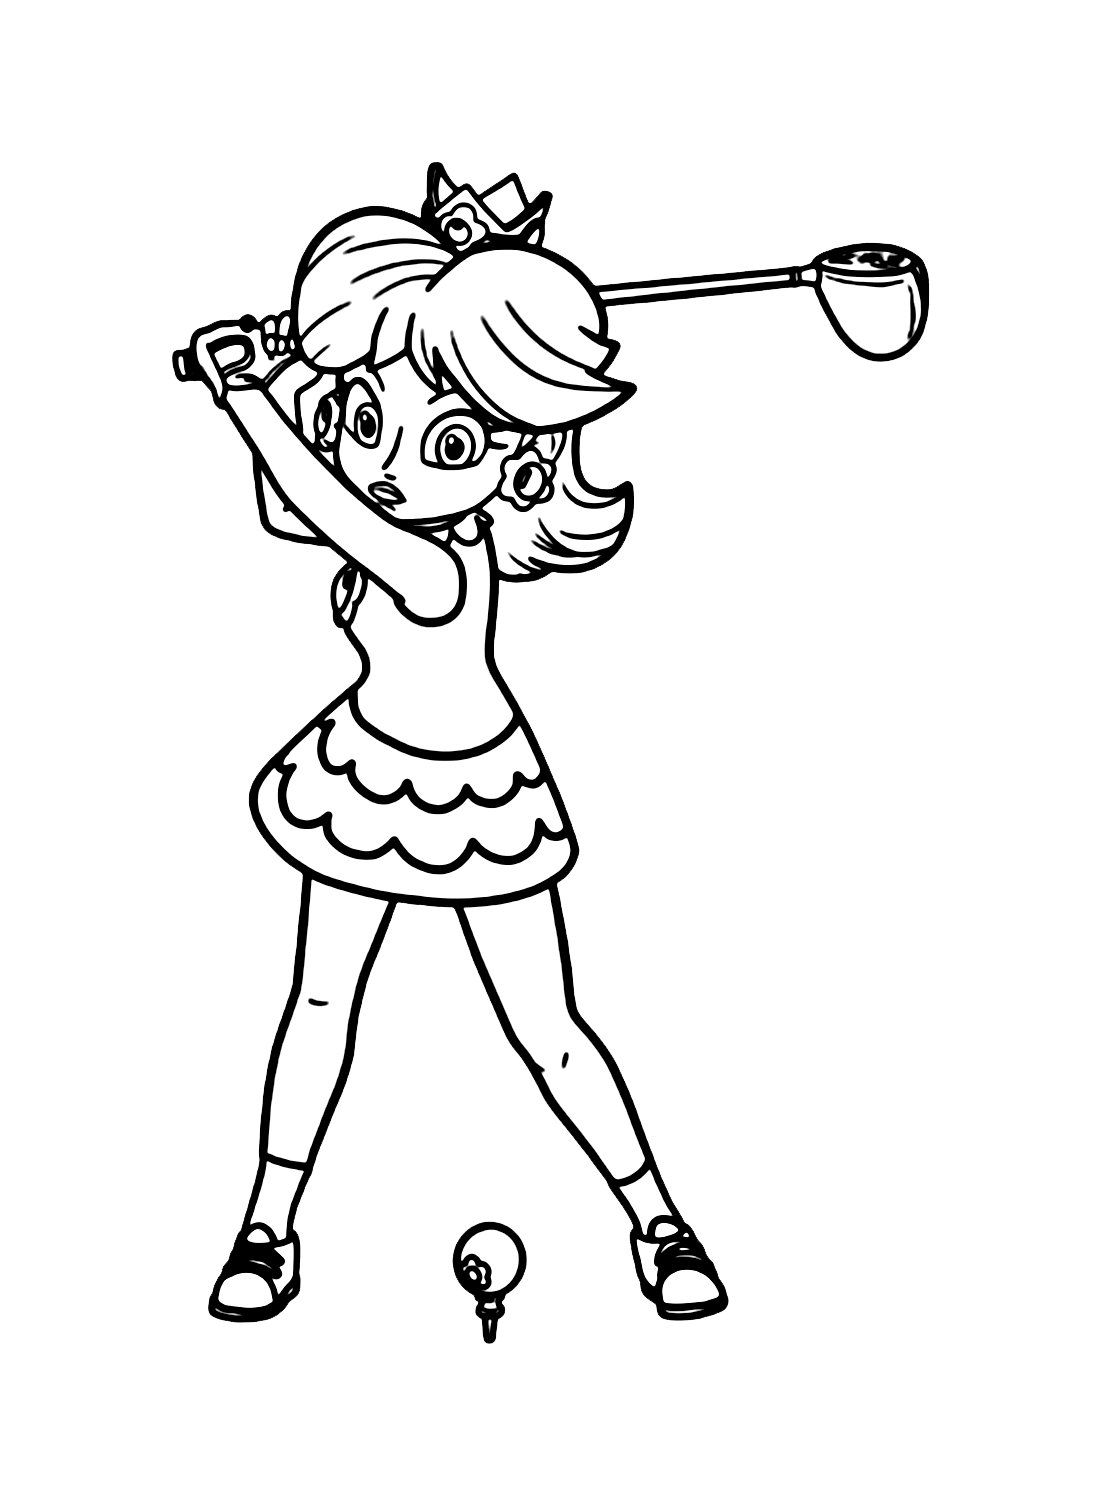 Princess Daisy playing Golf Coloring Page